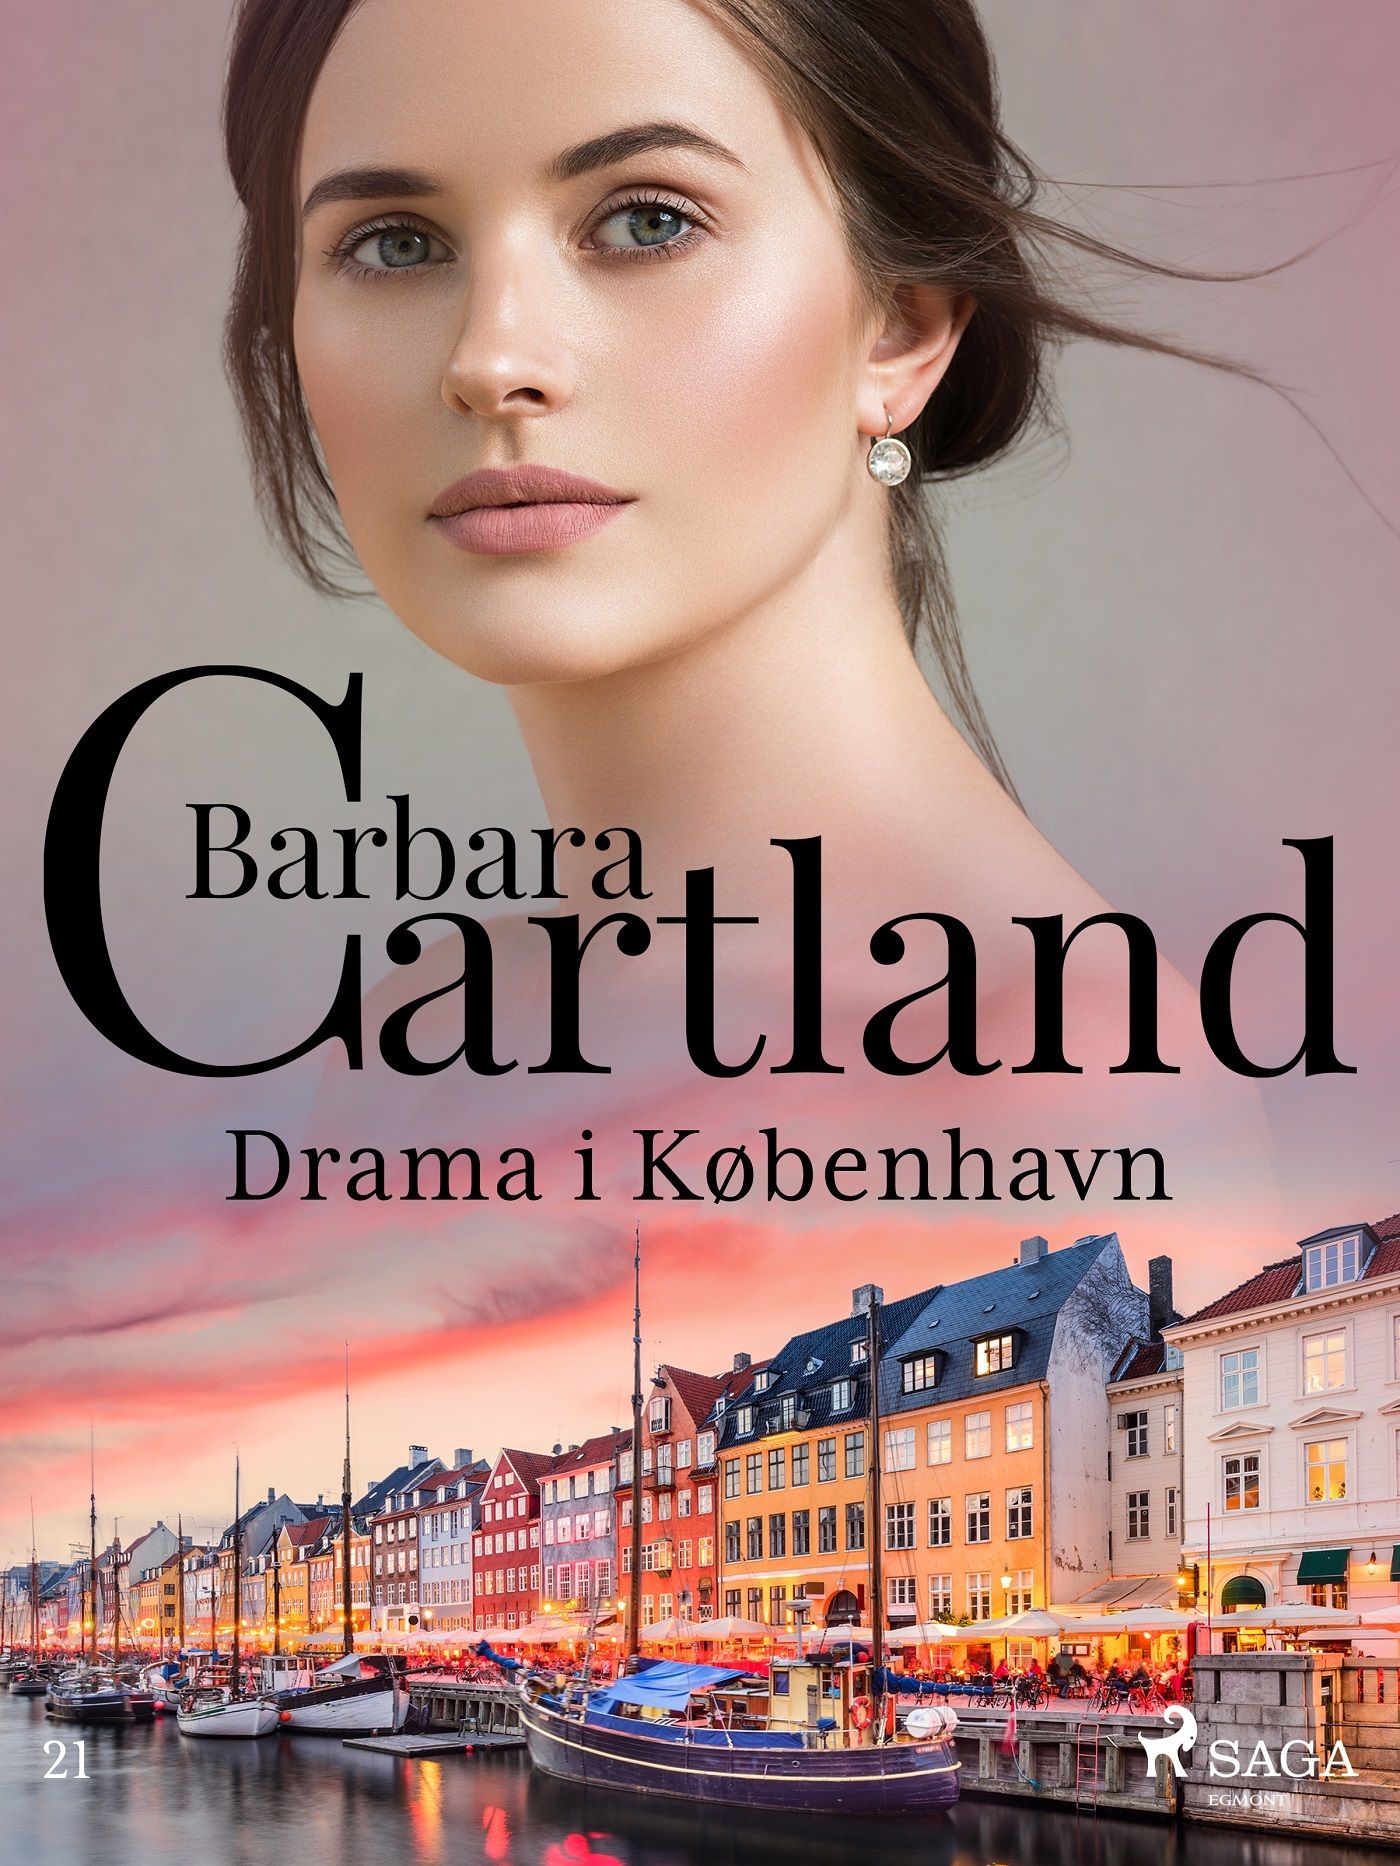 Drama i København, e-bok av Barbara Cartland